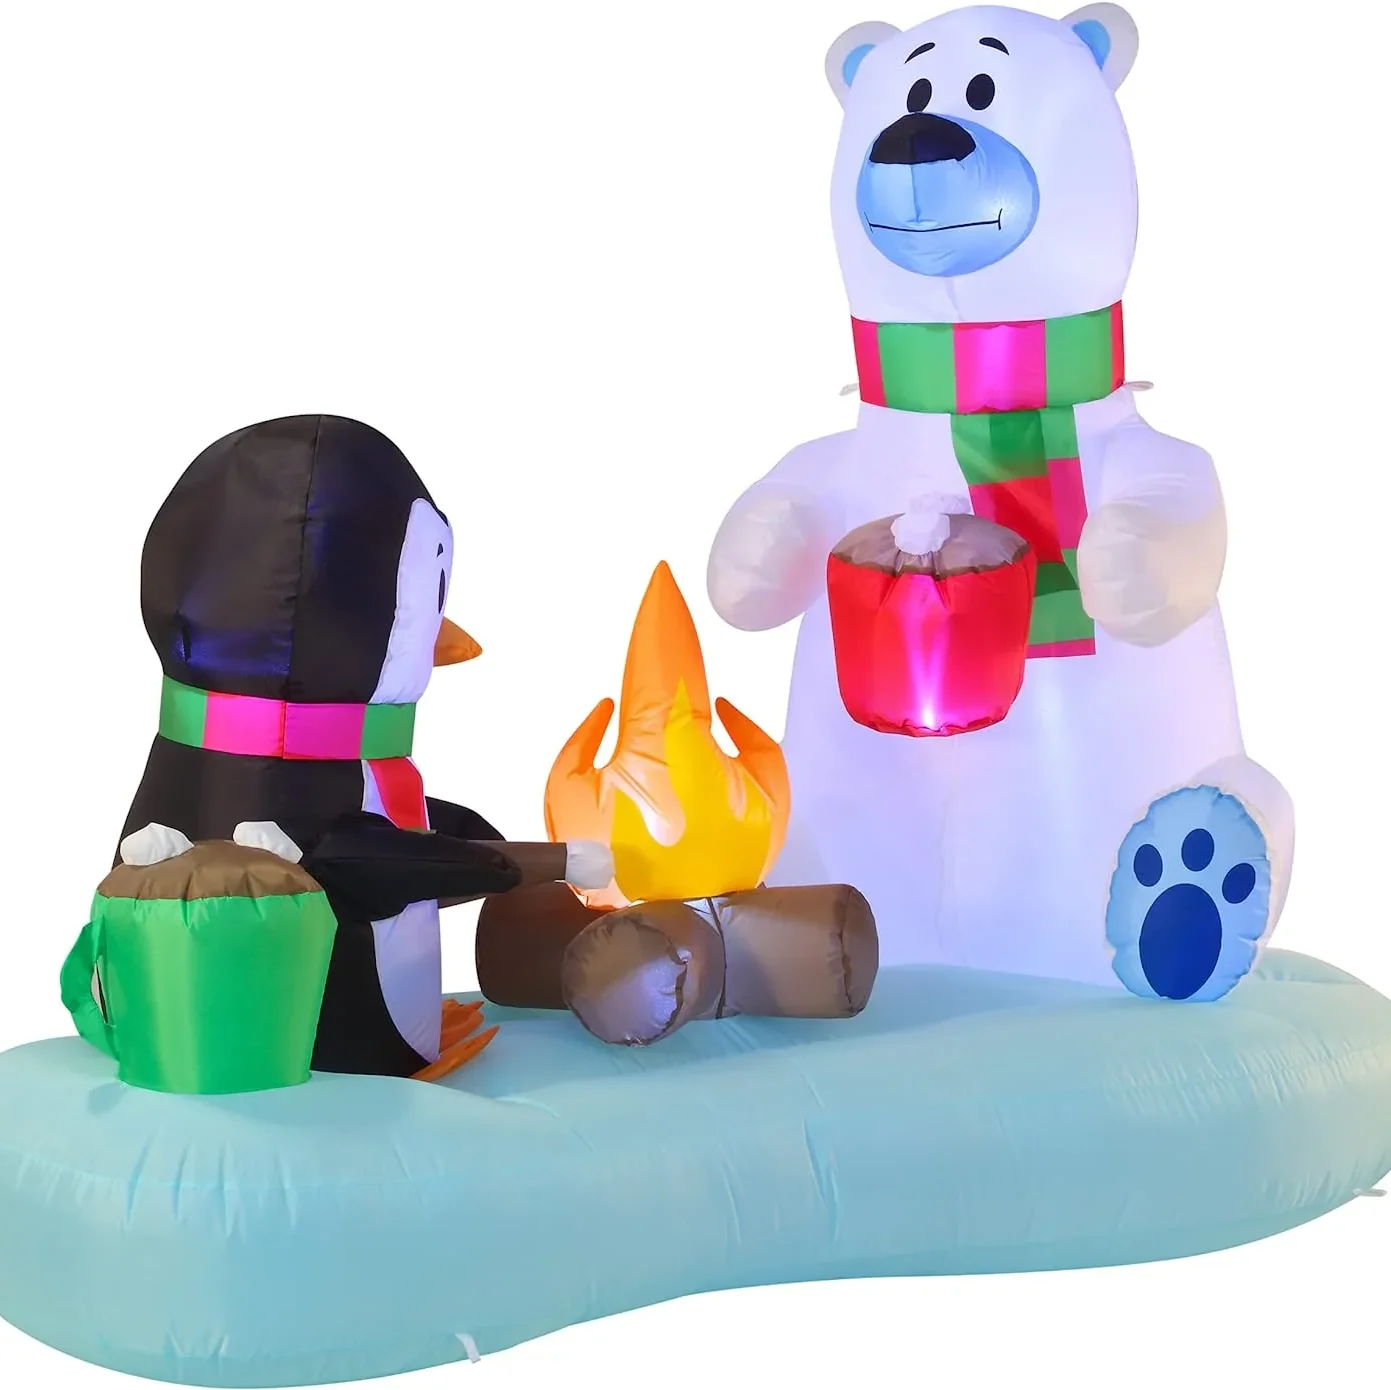 Penguin and polar bear making hot cocoa